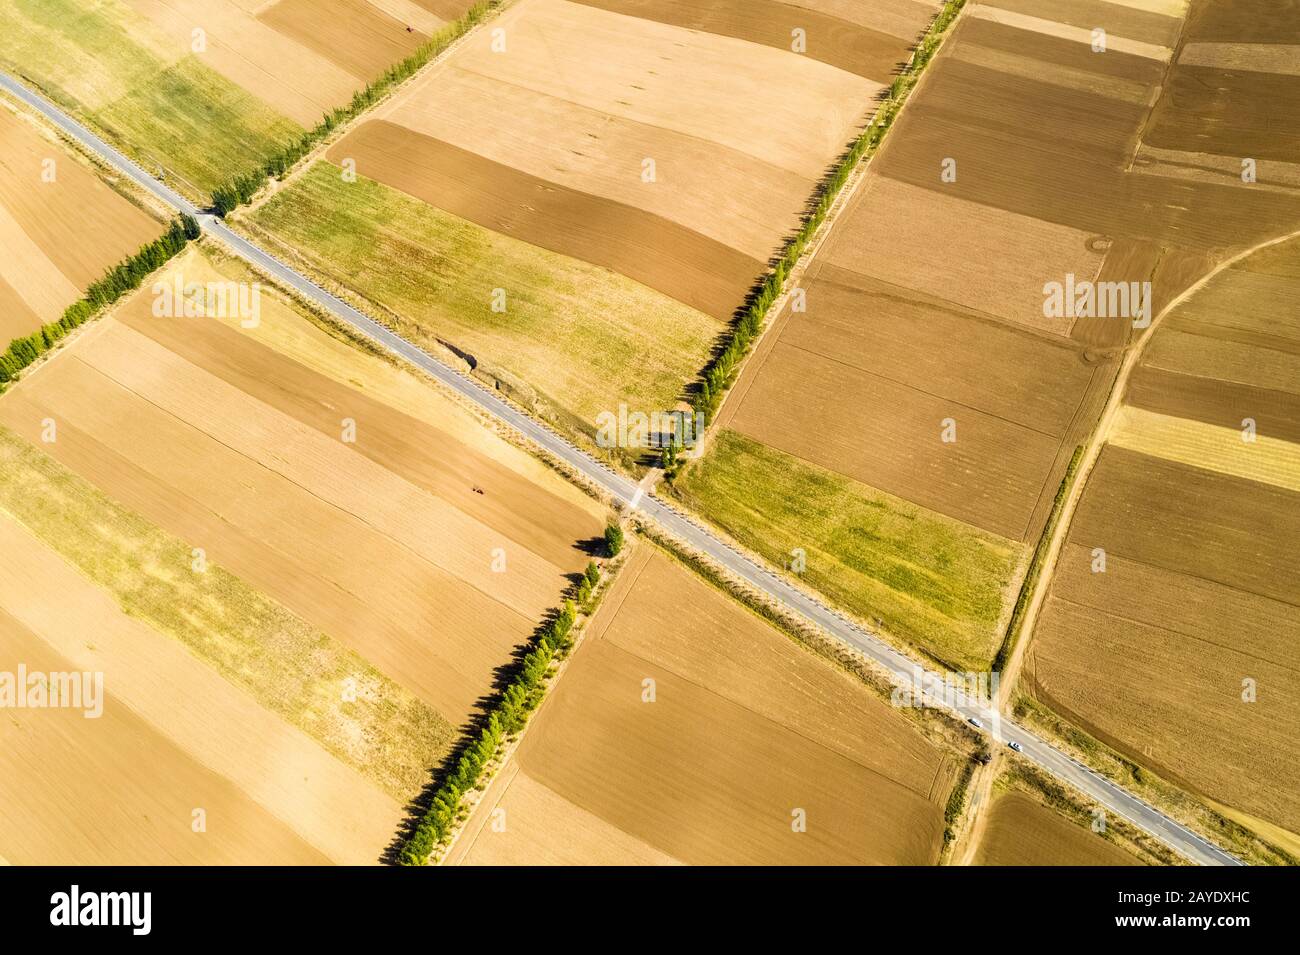 tierras de cultivo en otoño de siembra Foto de stock